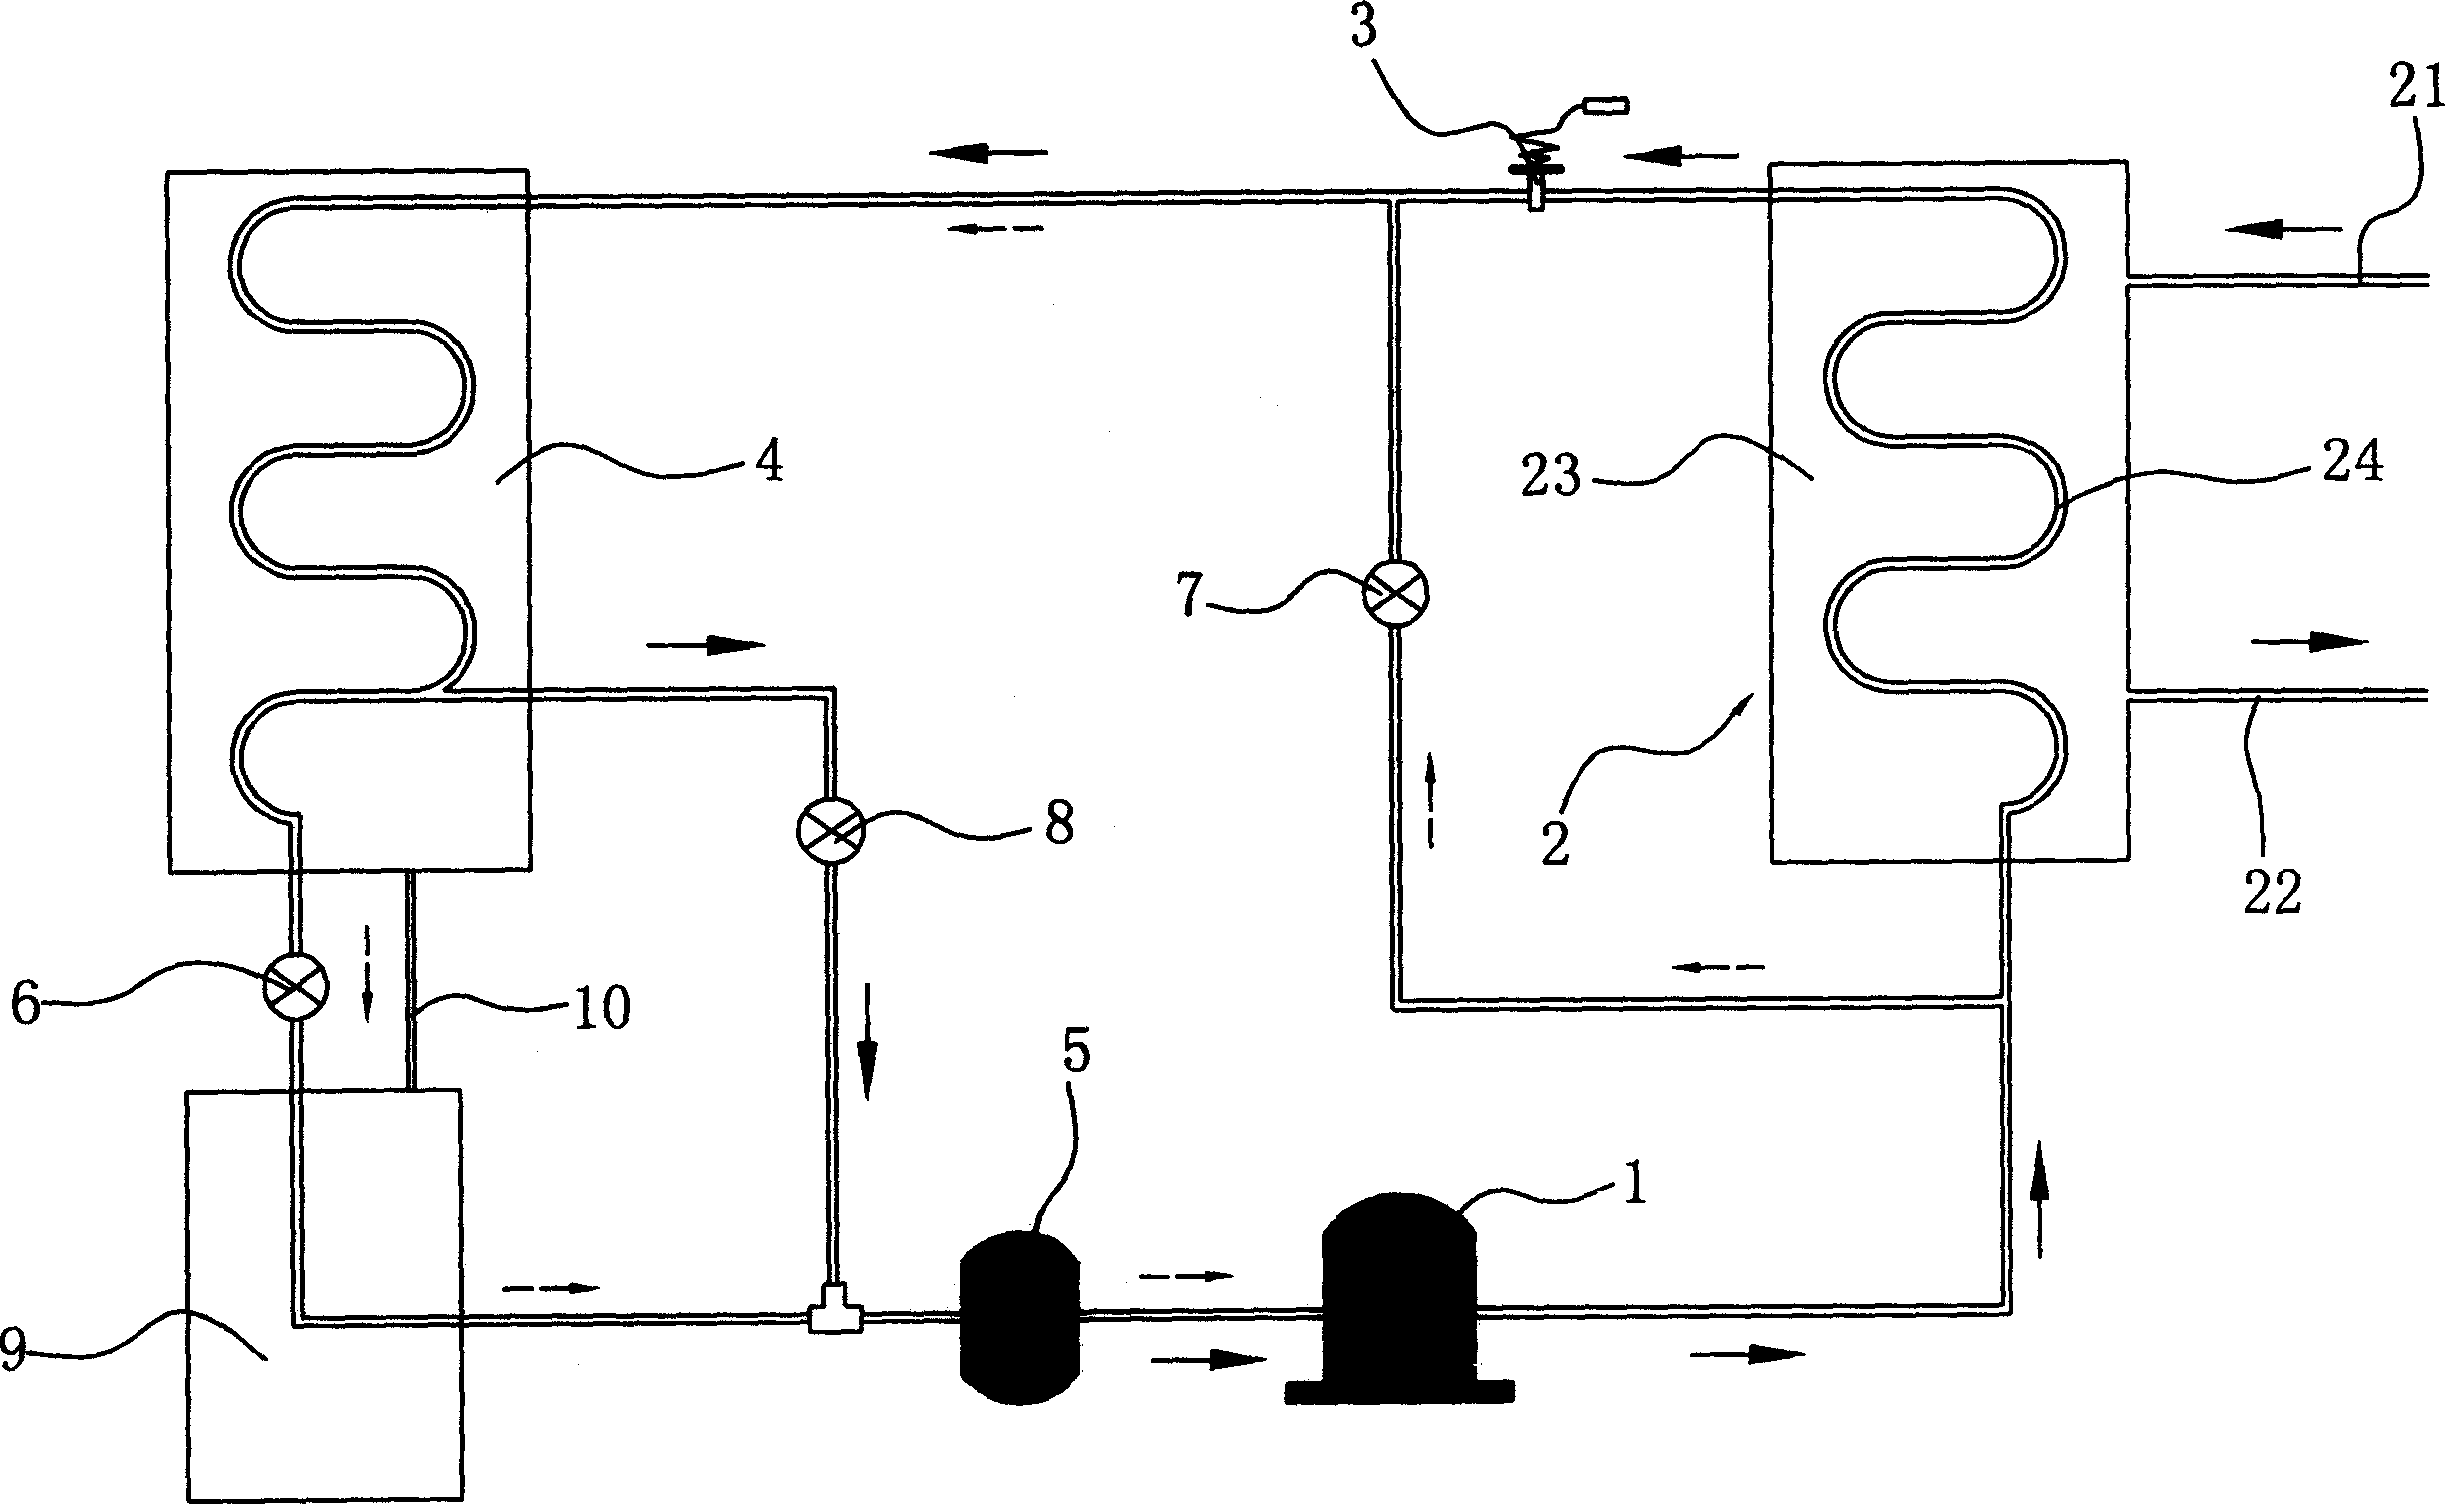 Heating circulation system of air energy heat pump